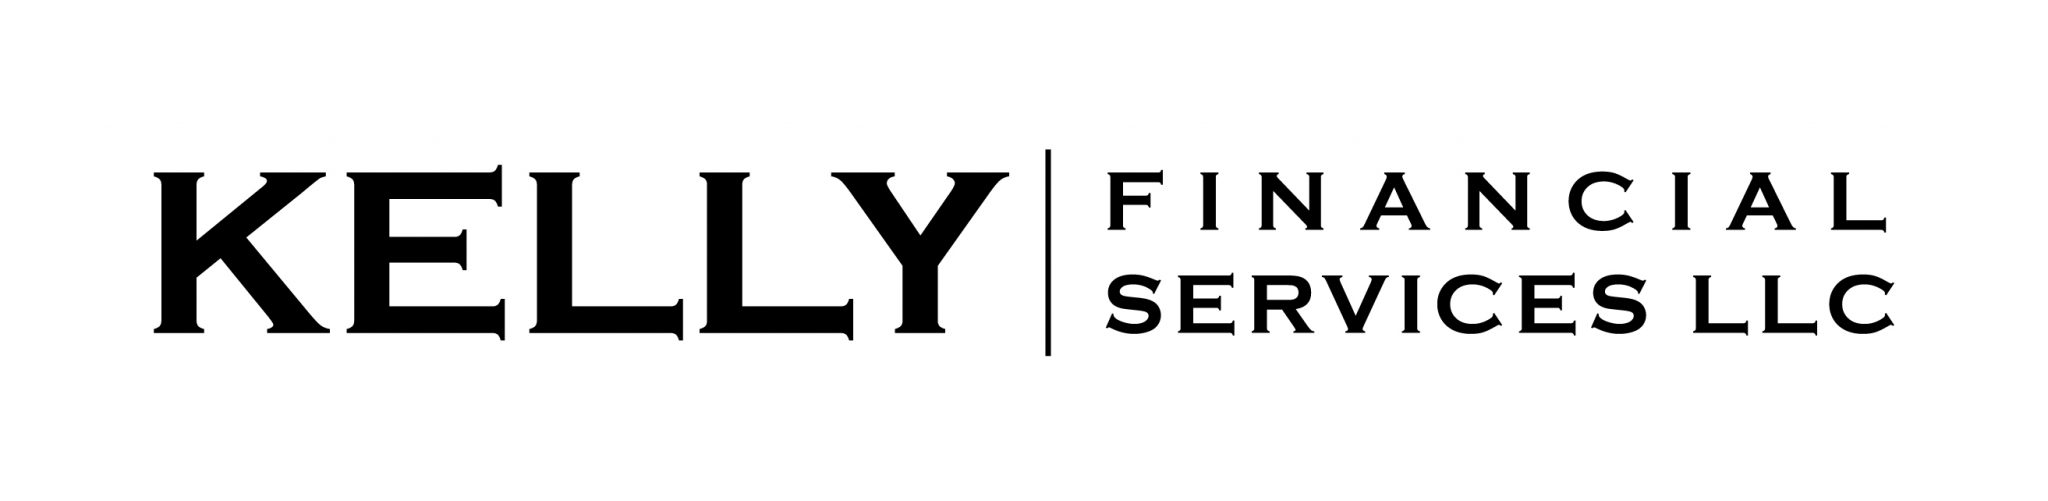 Inside Kelly Financial – Kelly Financial Services, LLC